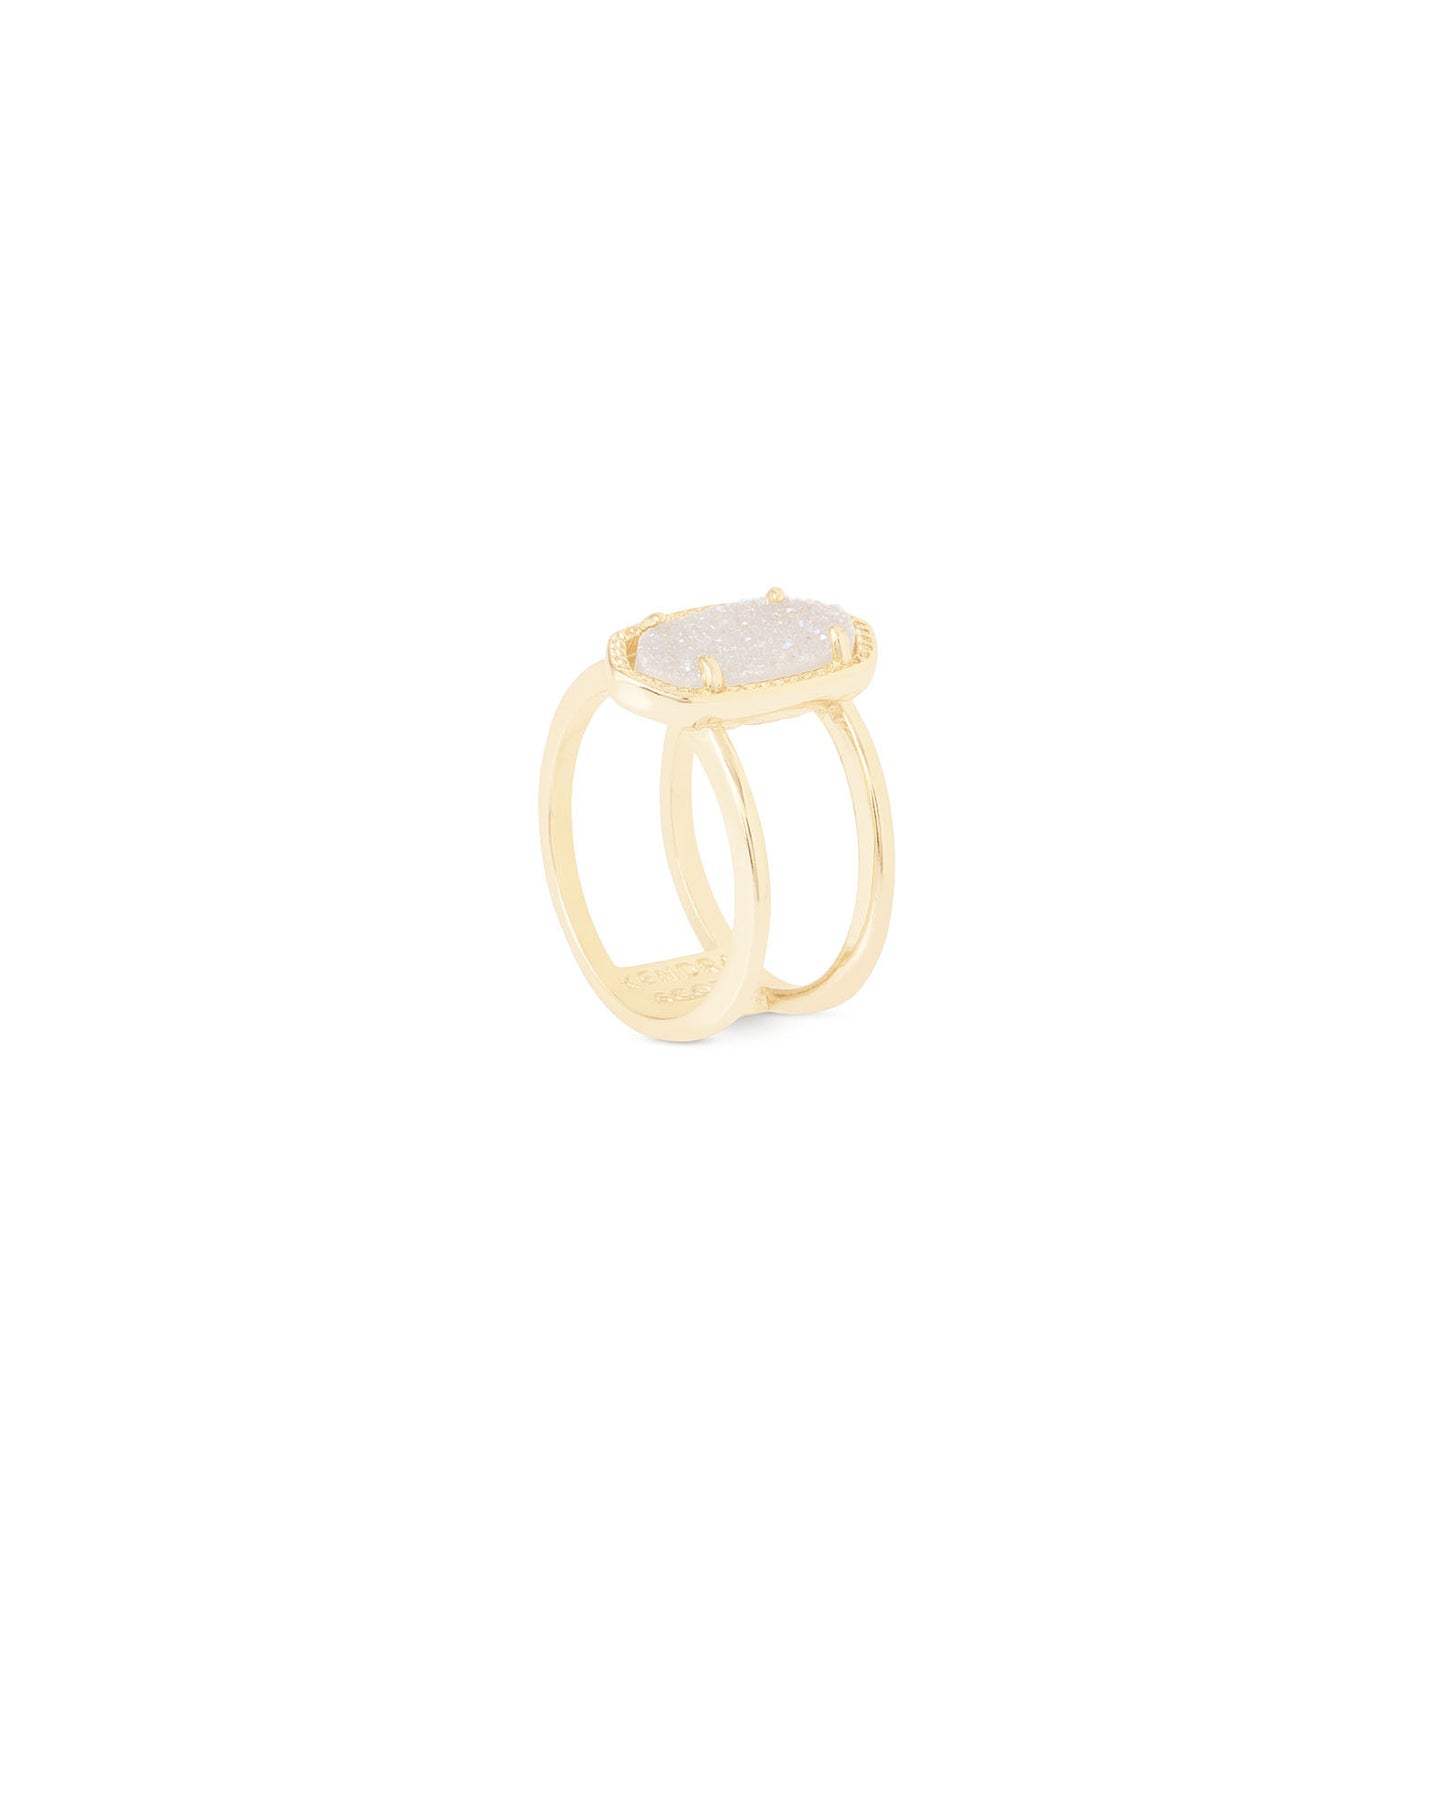 Kendra Scott Elyse Double Band Ring - Gold Iridescent Drusy